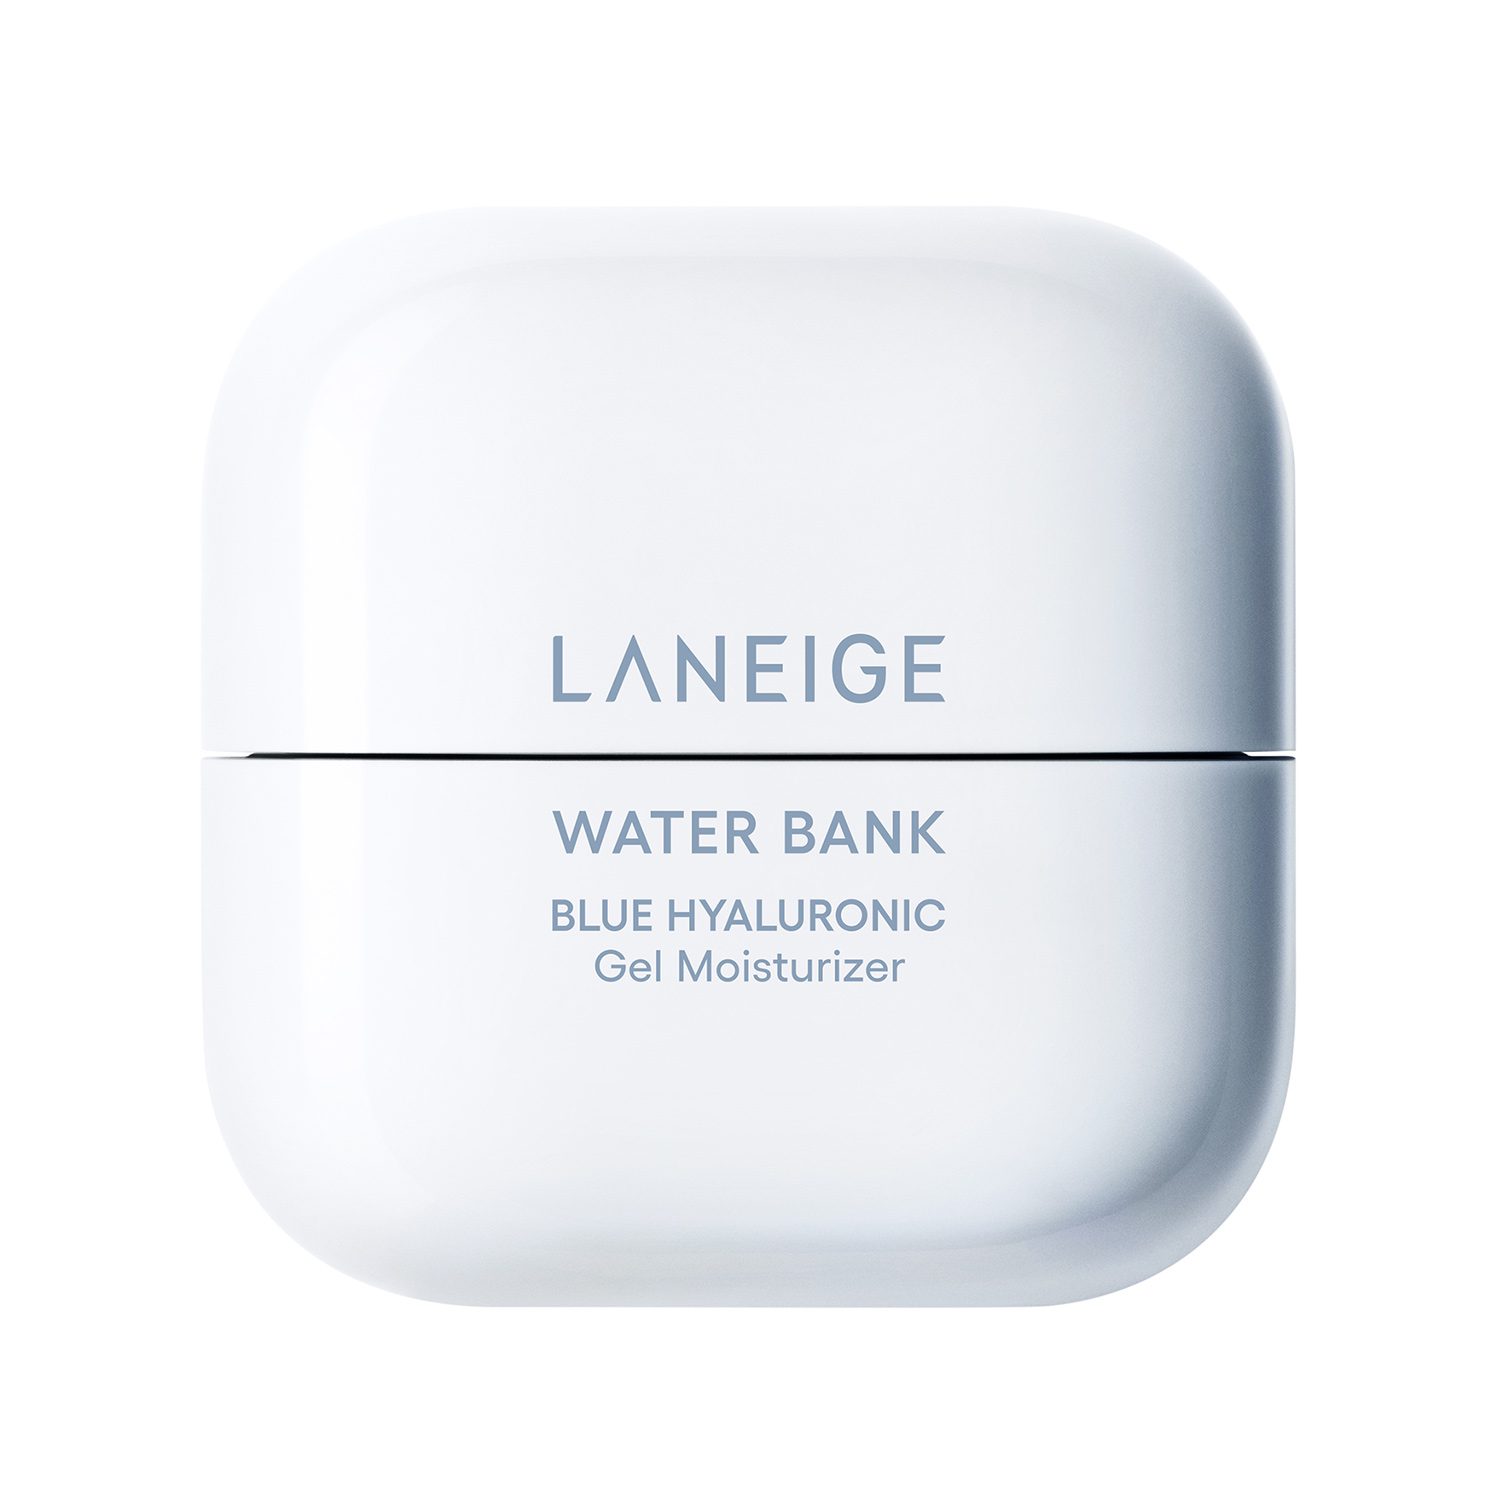 water bank blue hyaluronic gel moisturizer (gel refrescante para el rostro)